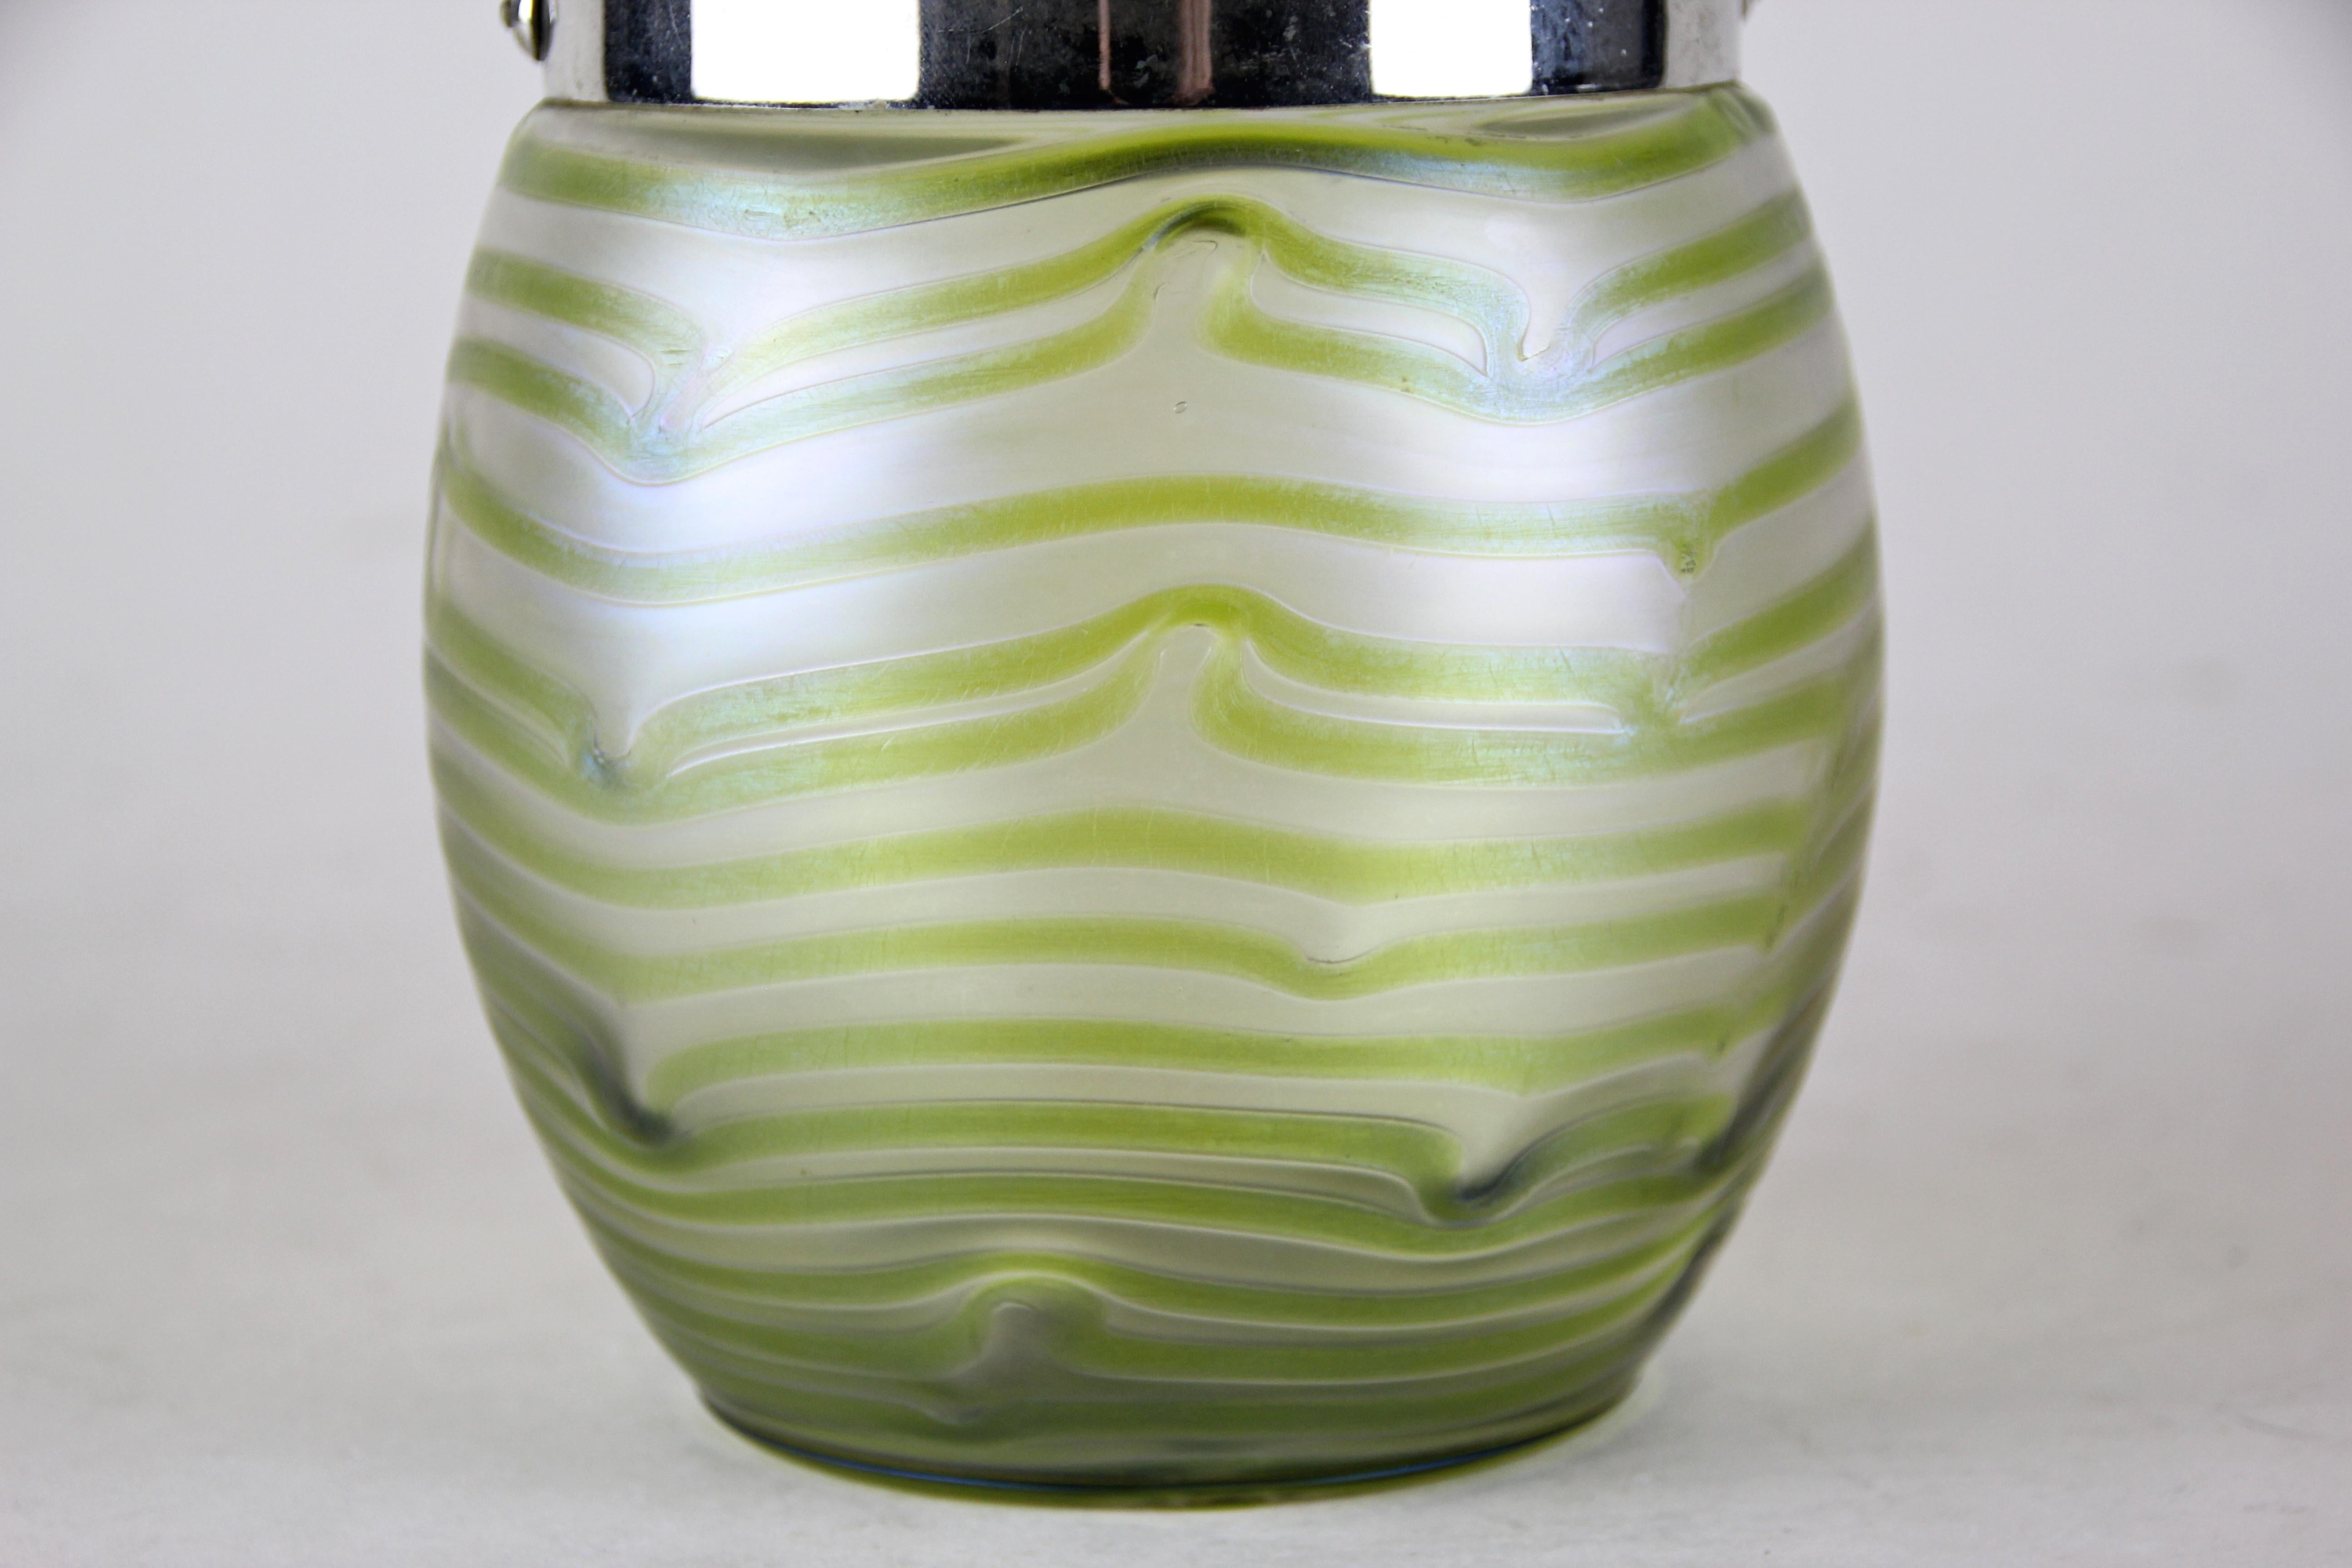 iridescent glass jars with lids